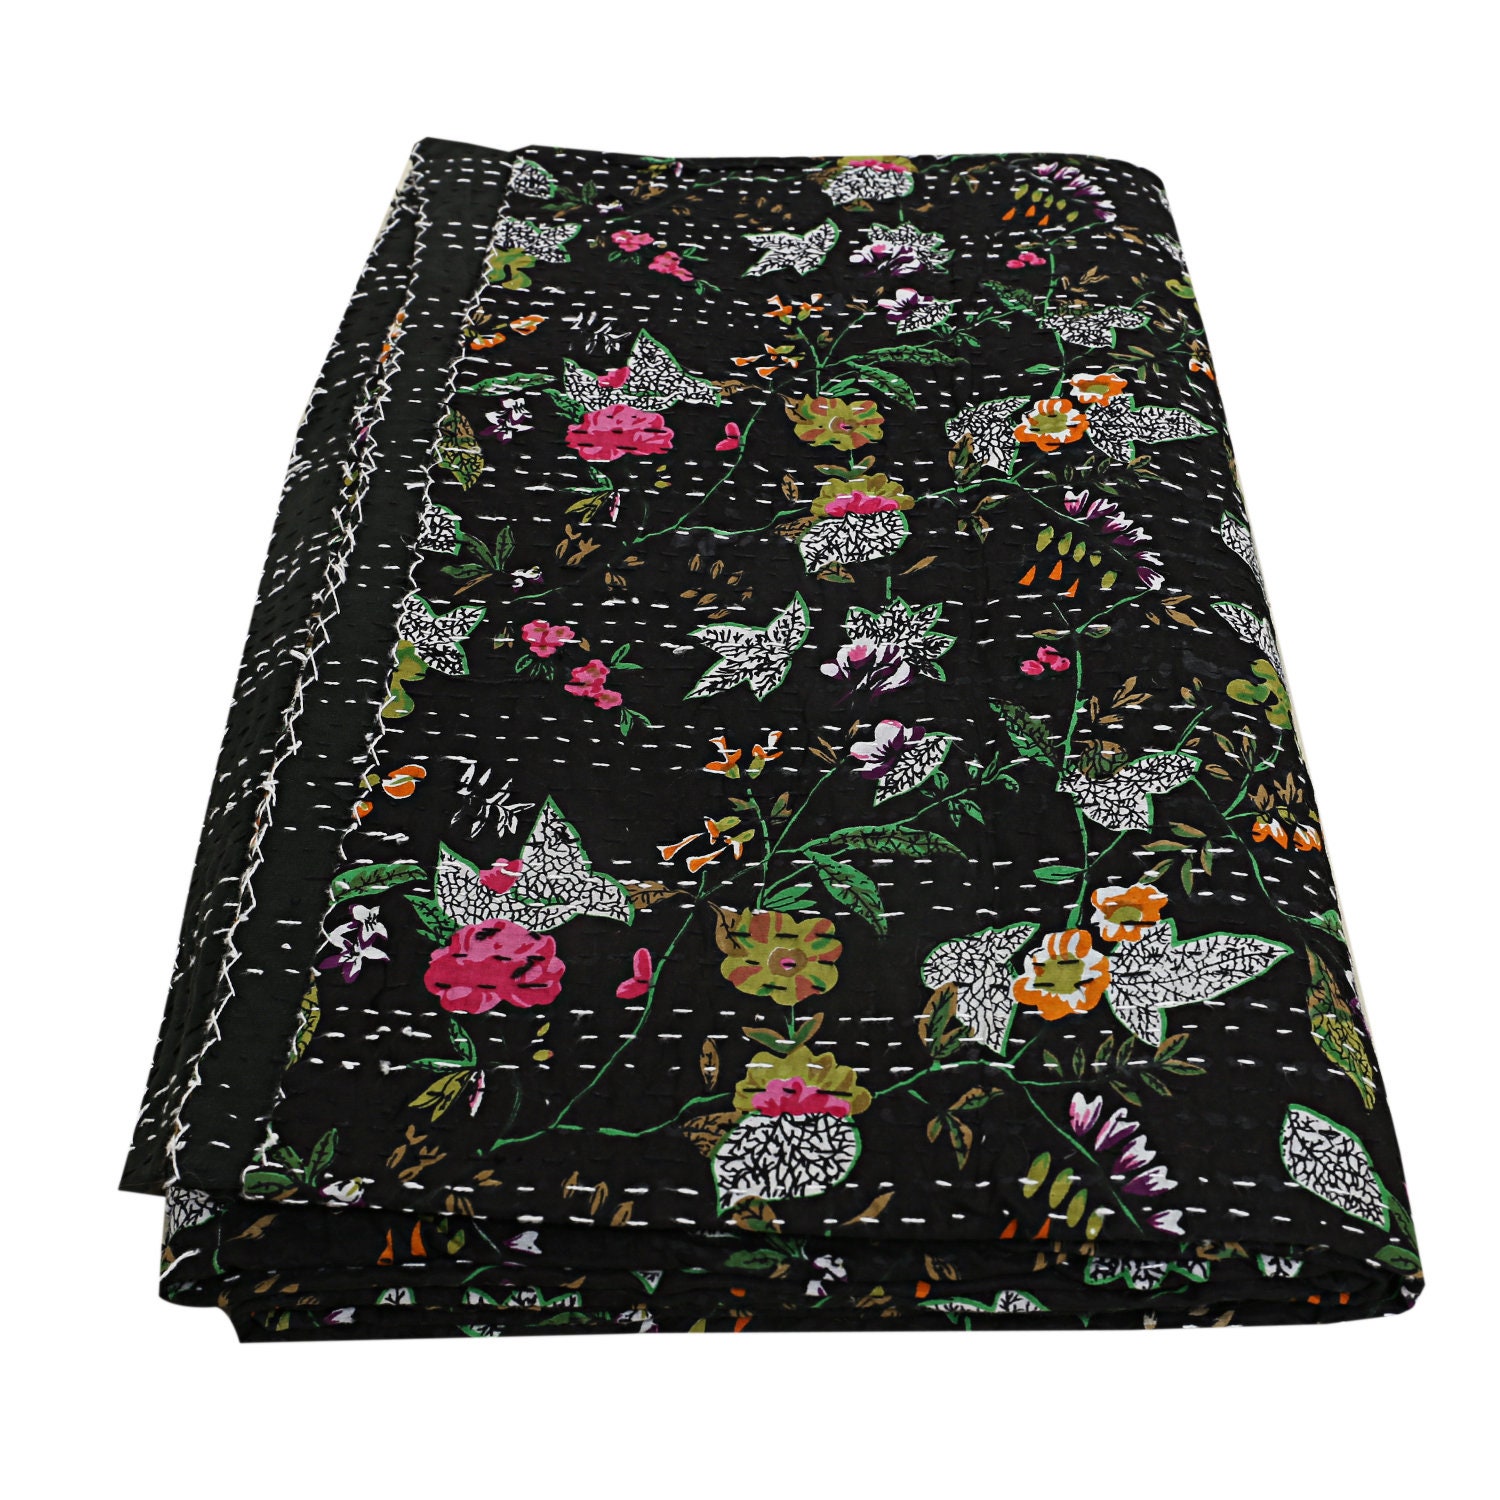 Black Floral Indian Twin Kantha Quilt Bedspread Blanket Bedding Handmade Throw 